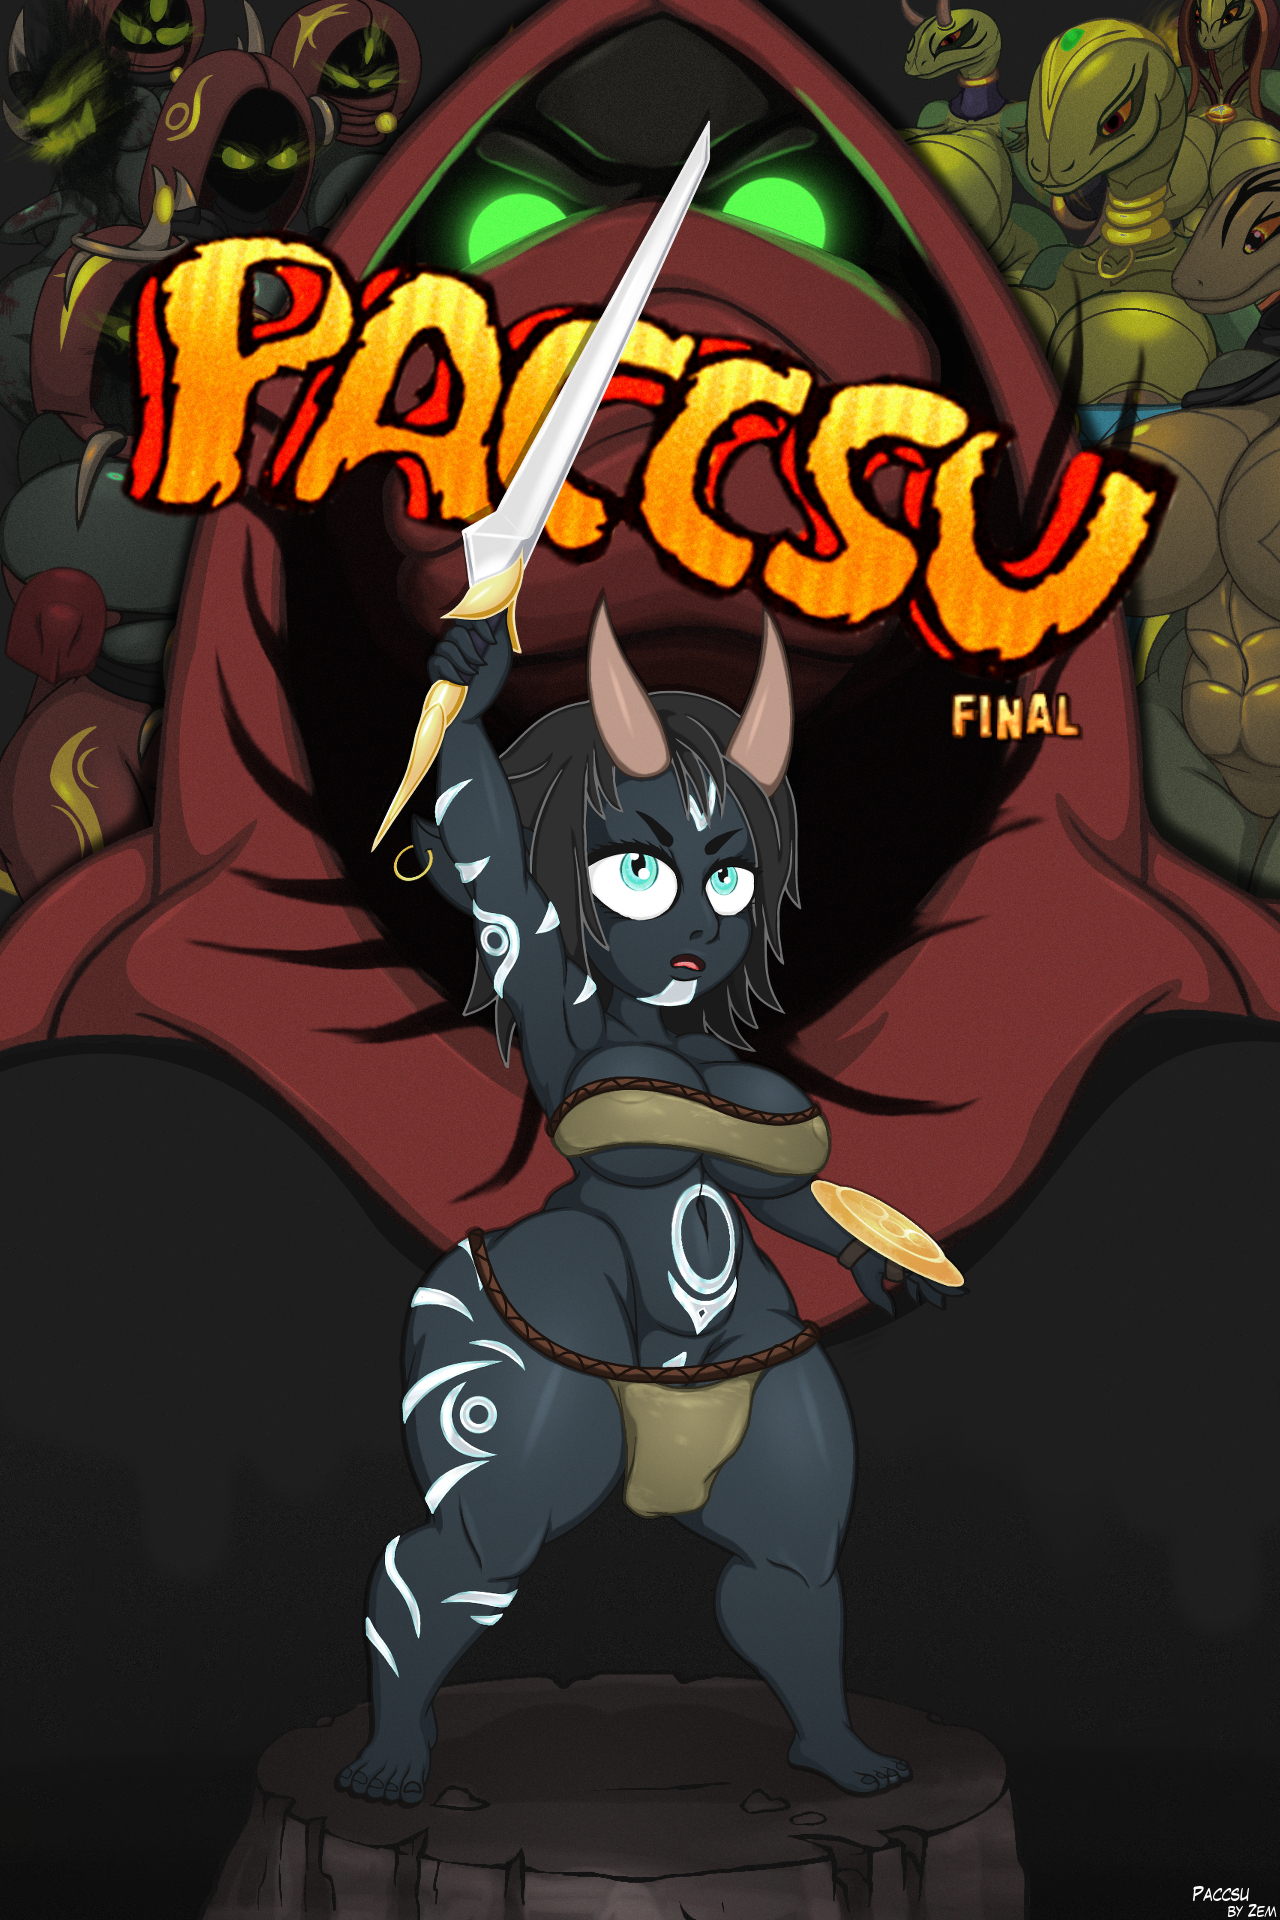 Paccsu 1.000 FINAL Release! - Paccsu by Paccsu